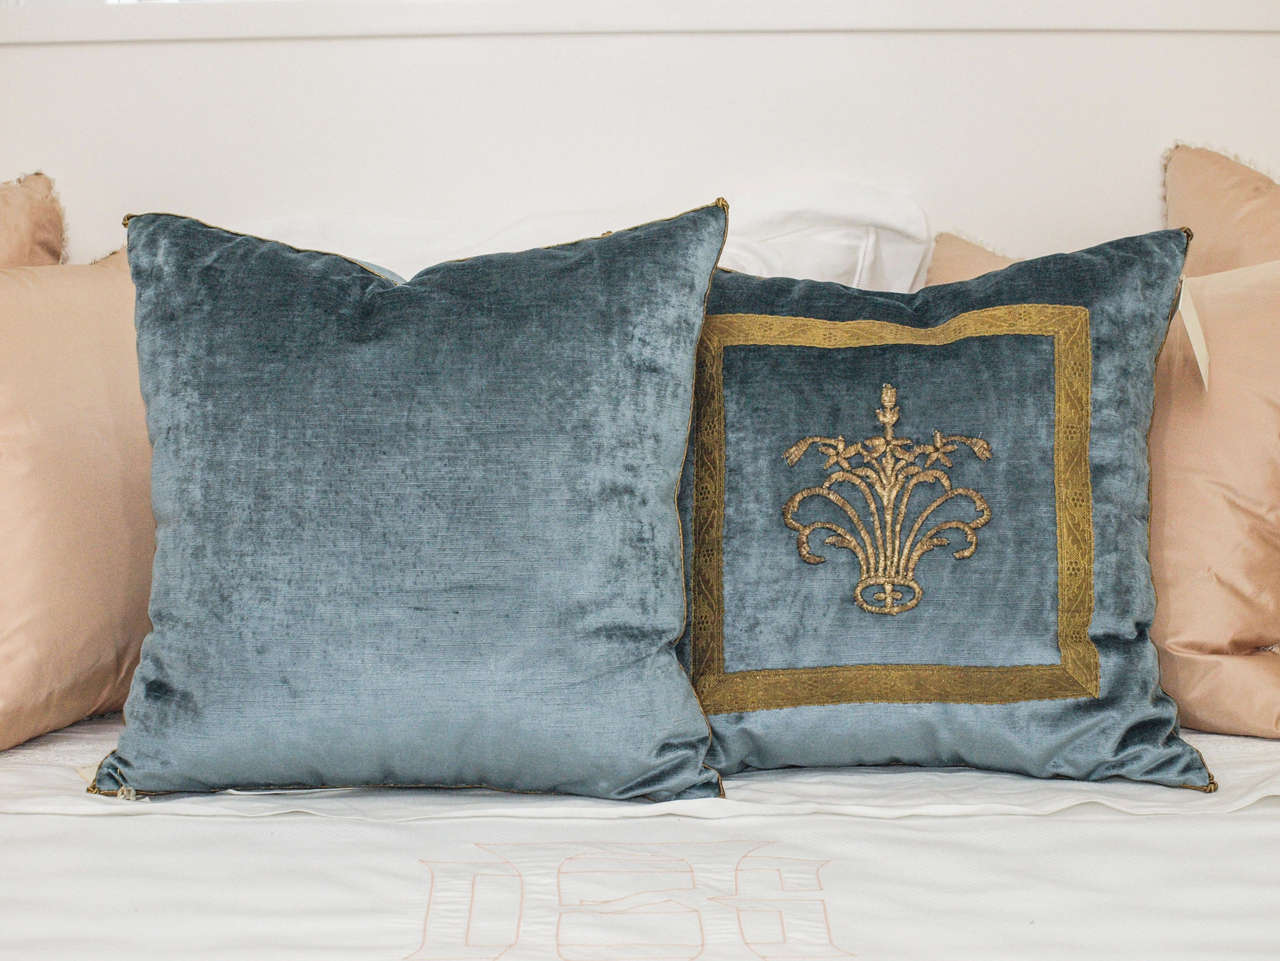 Antique Ottoman Empire raised gold metallic embroidery with metallic gold galon on a wedgewood blue velvet. Designed by Rebecca Vizard of B.VIZ Design. 